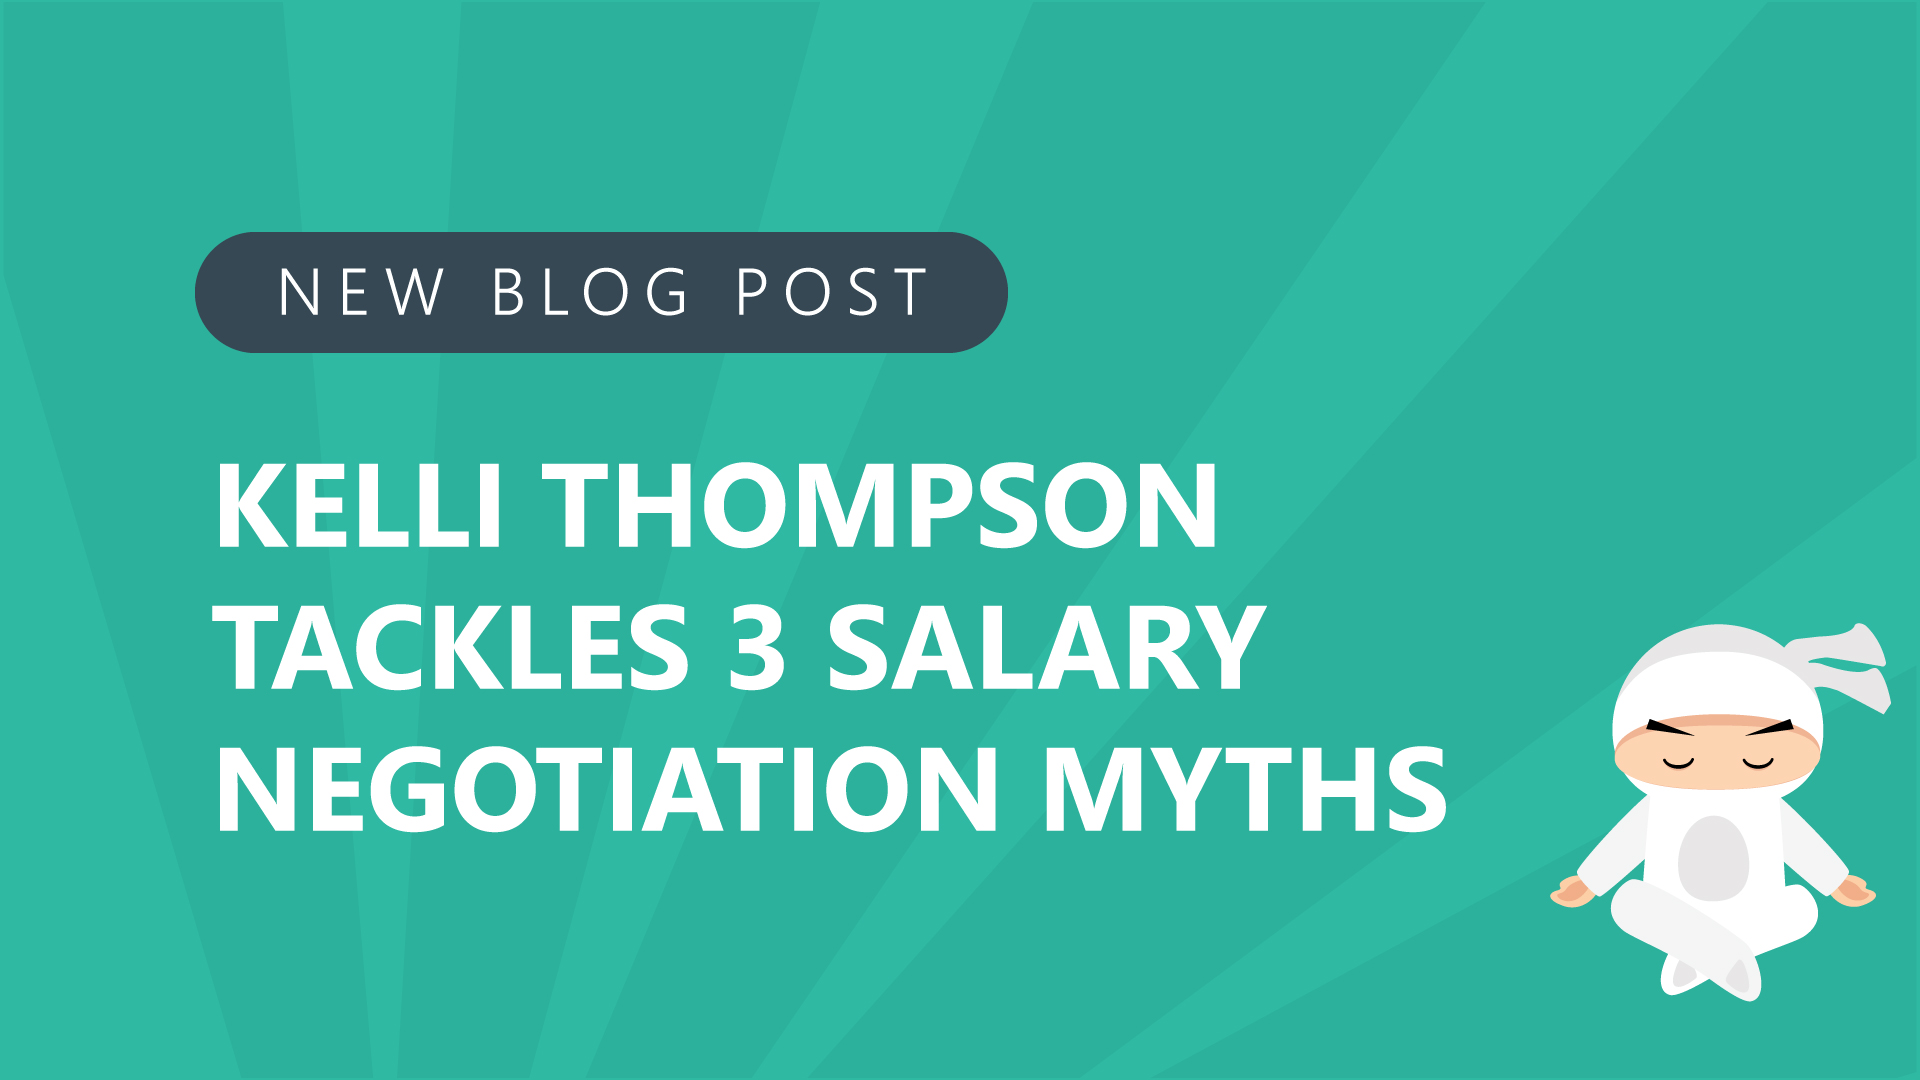 Kelli thompson tackles 3 salary negotiation myths